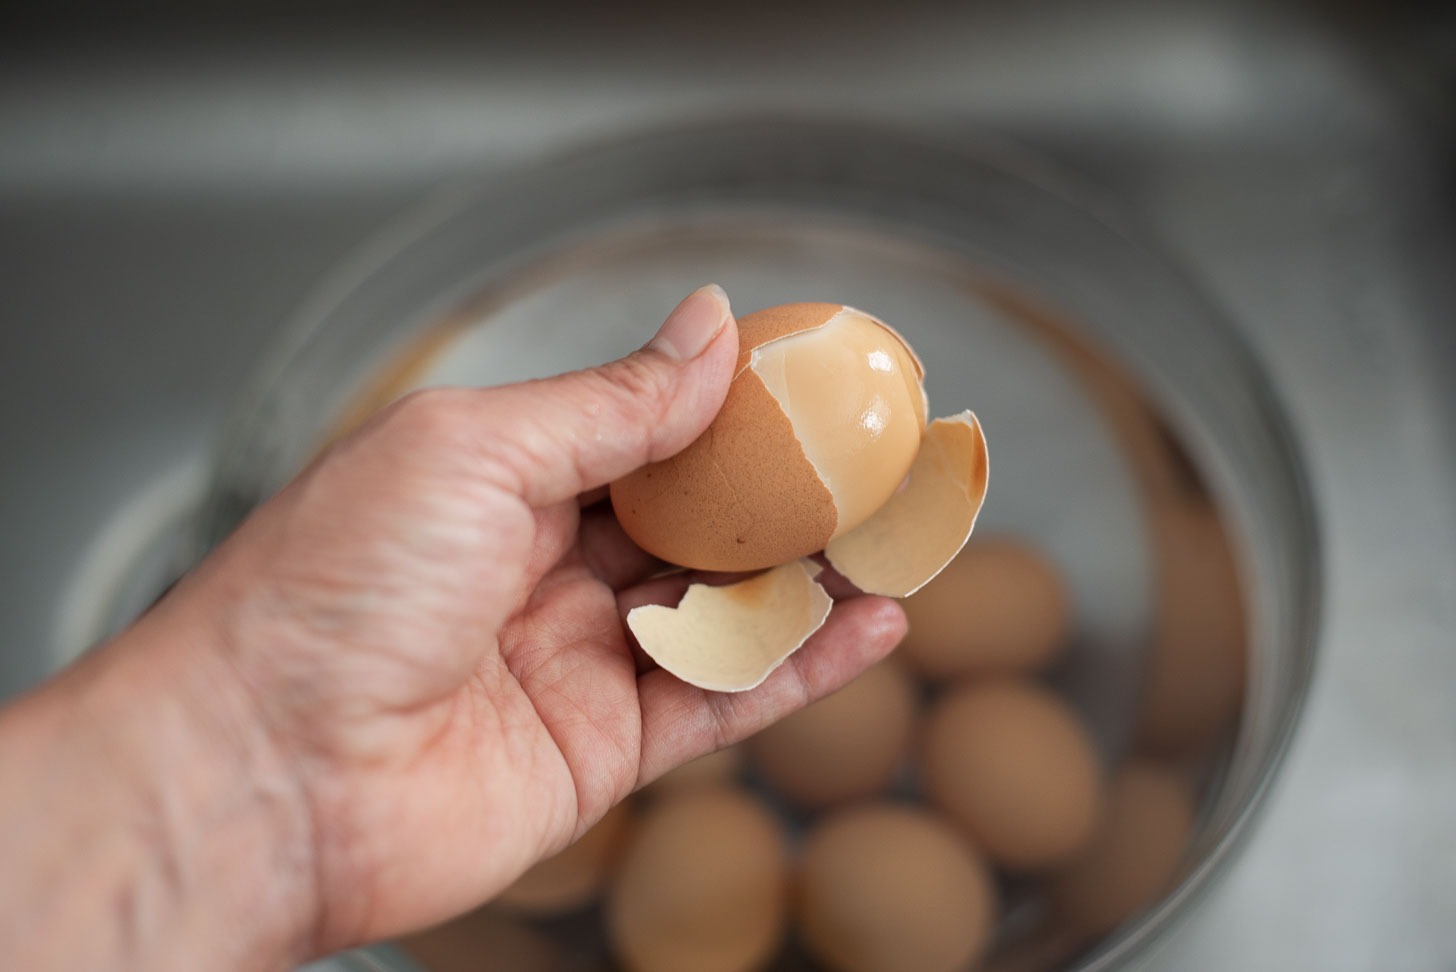 Peeling the egg shell off to reveal the brown egg whites of Korean sauna eggs.